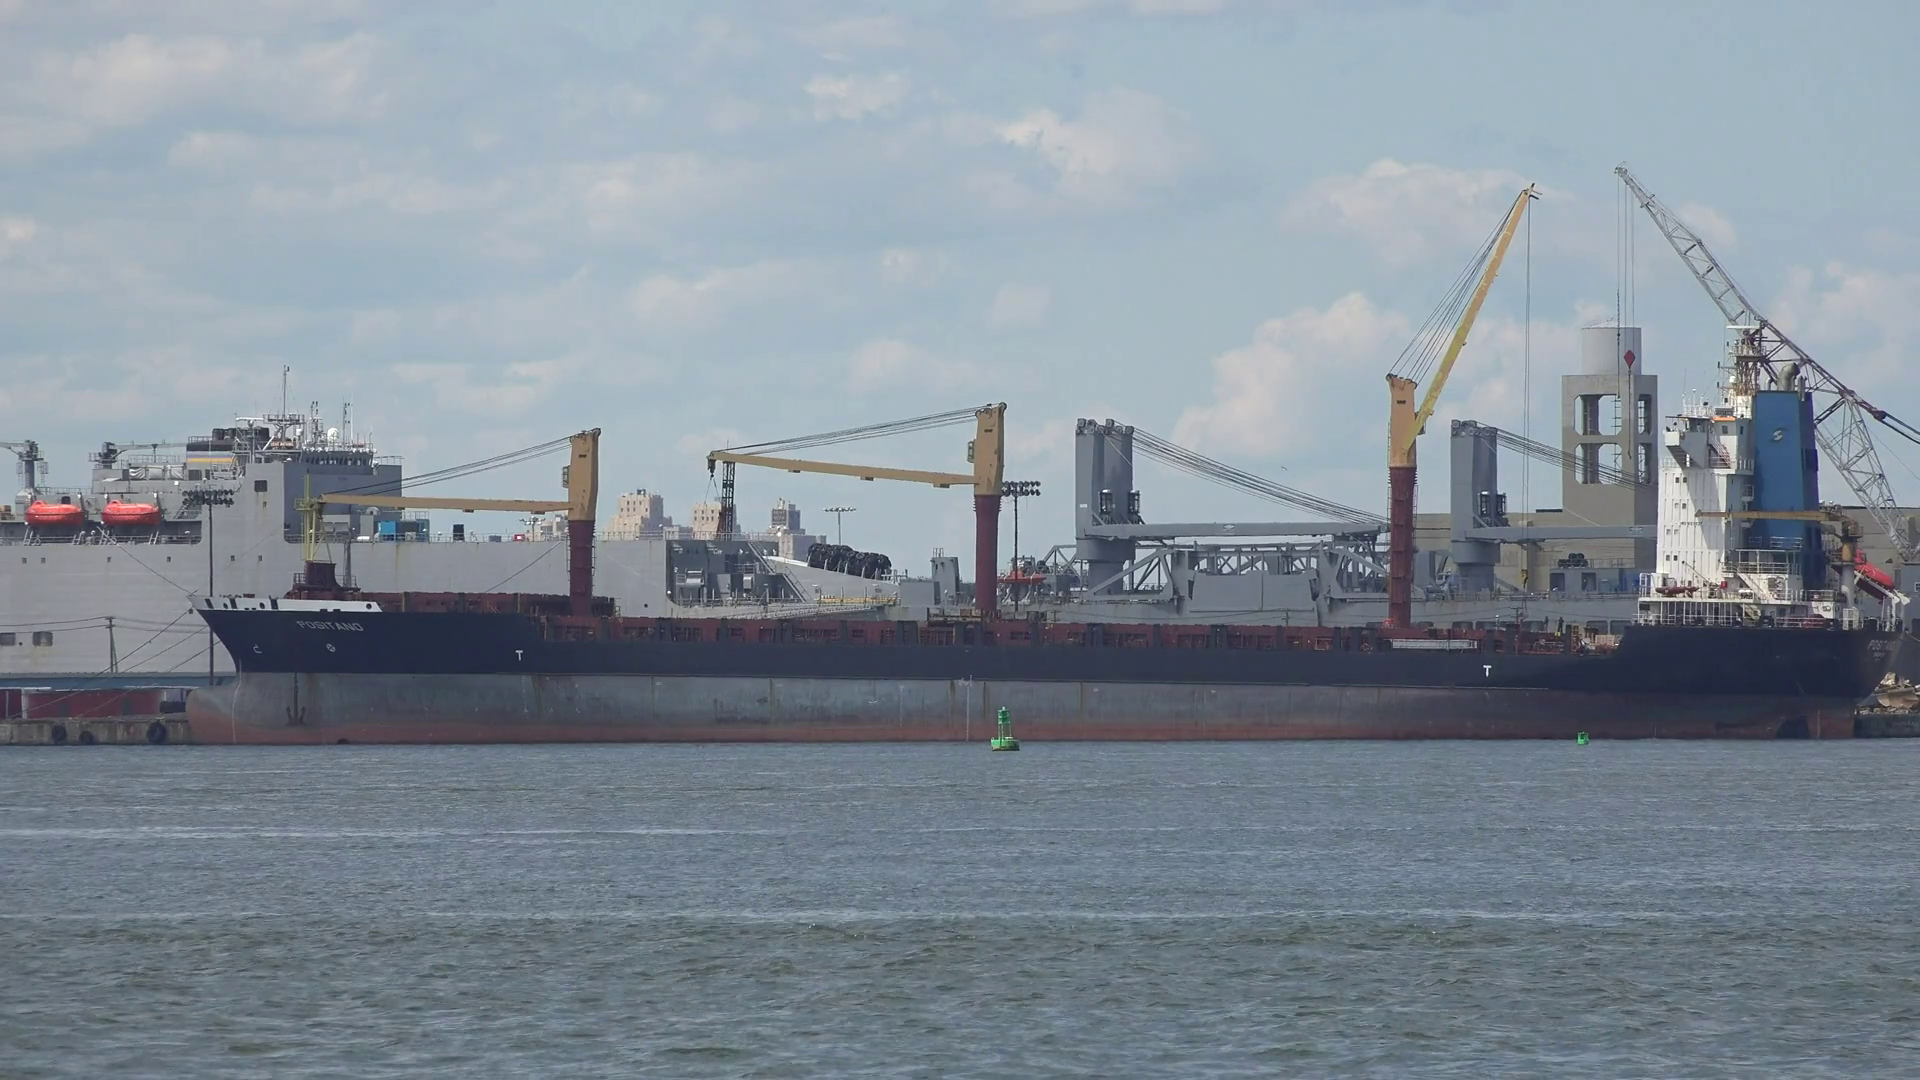 Industrial Ship In Harbor Stock Video Footage - VideoBlocks